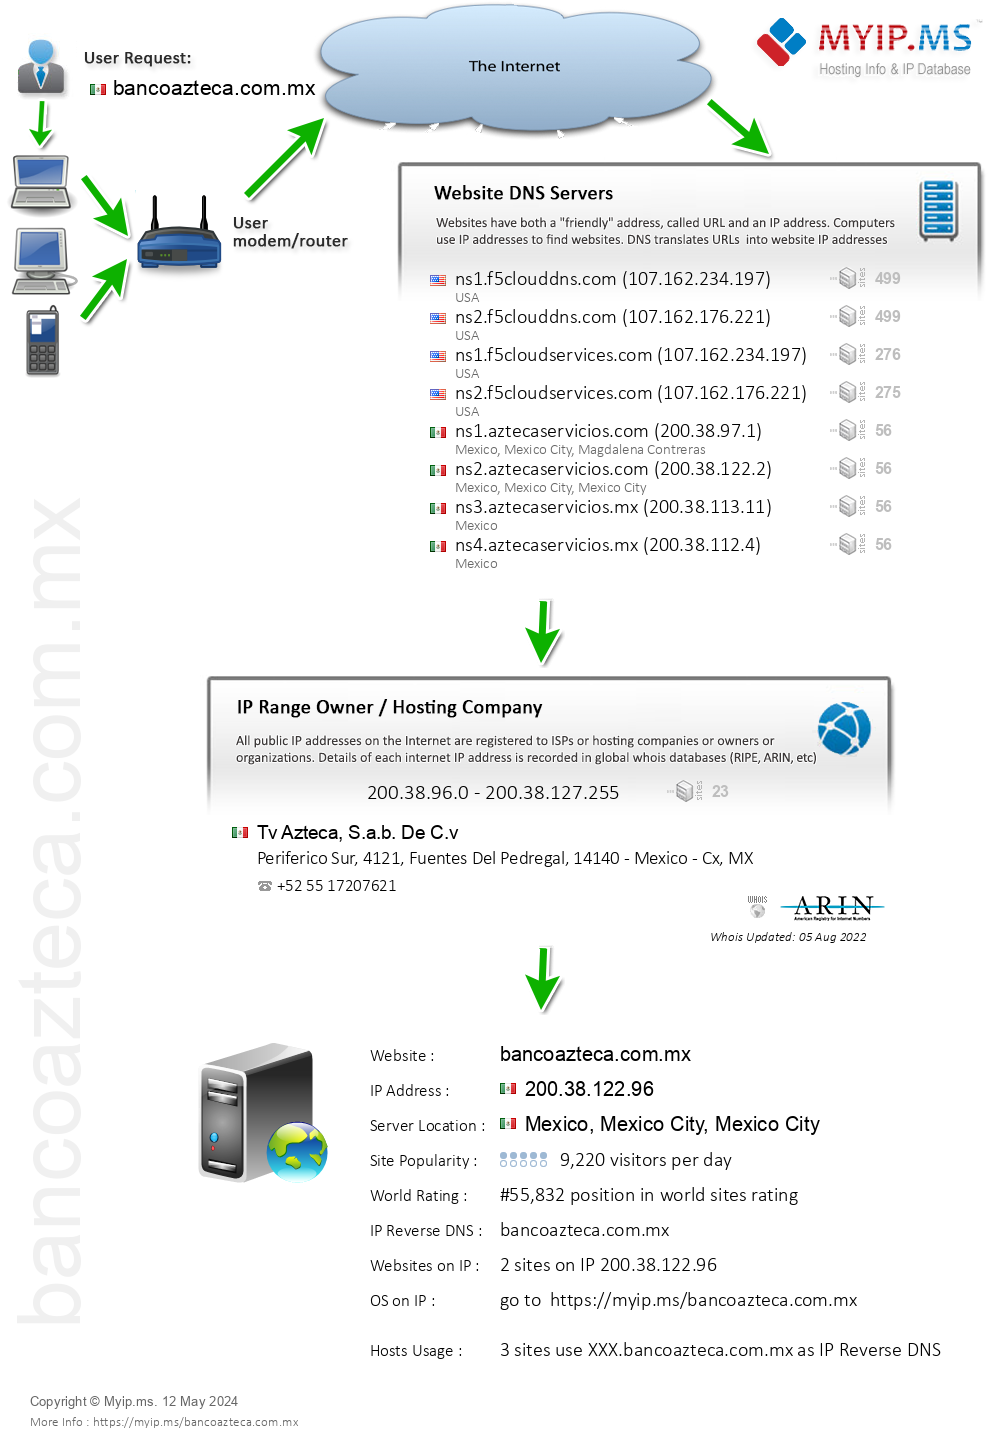 Bancoazteca.com.mx - Website Hosting Visual IP Diagram